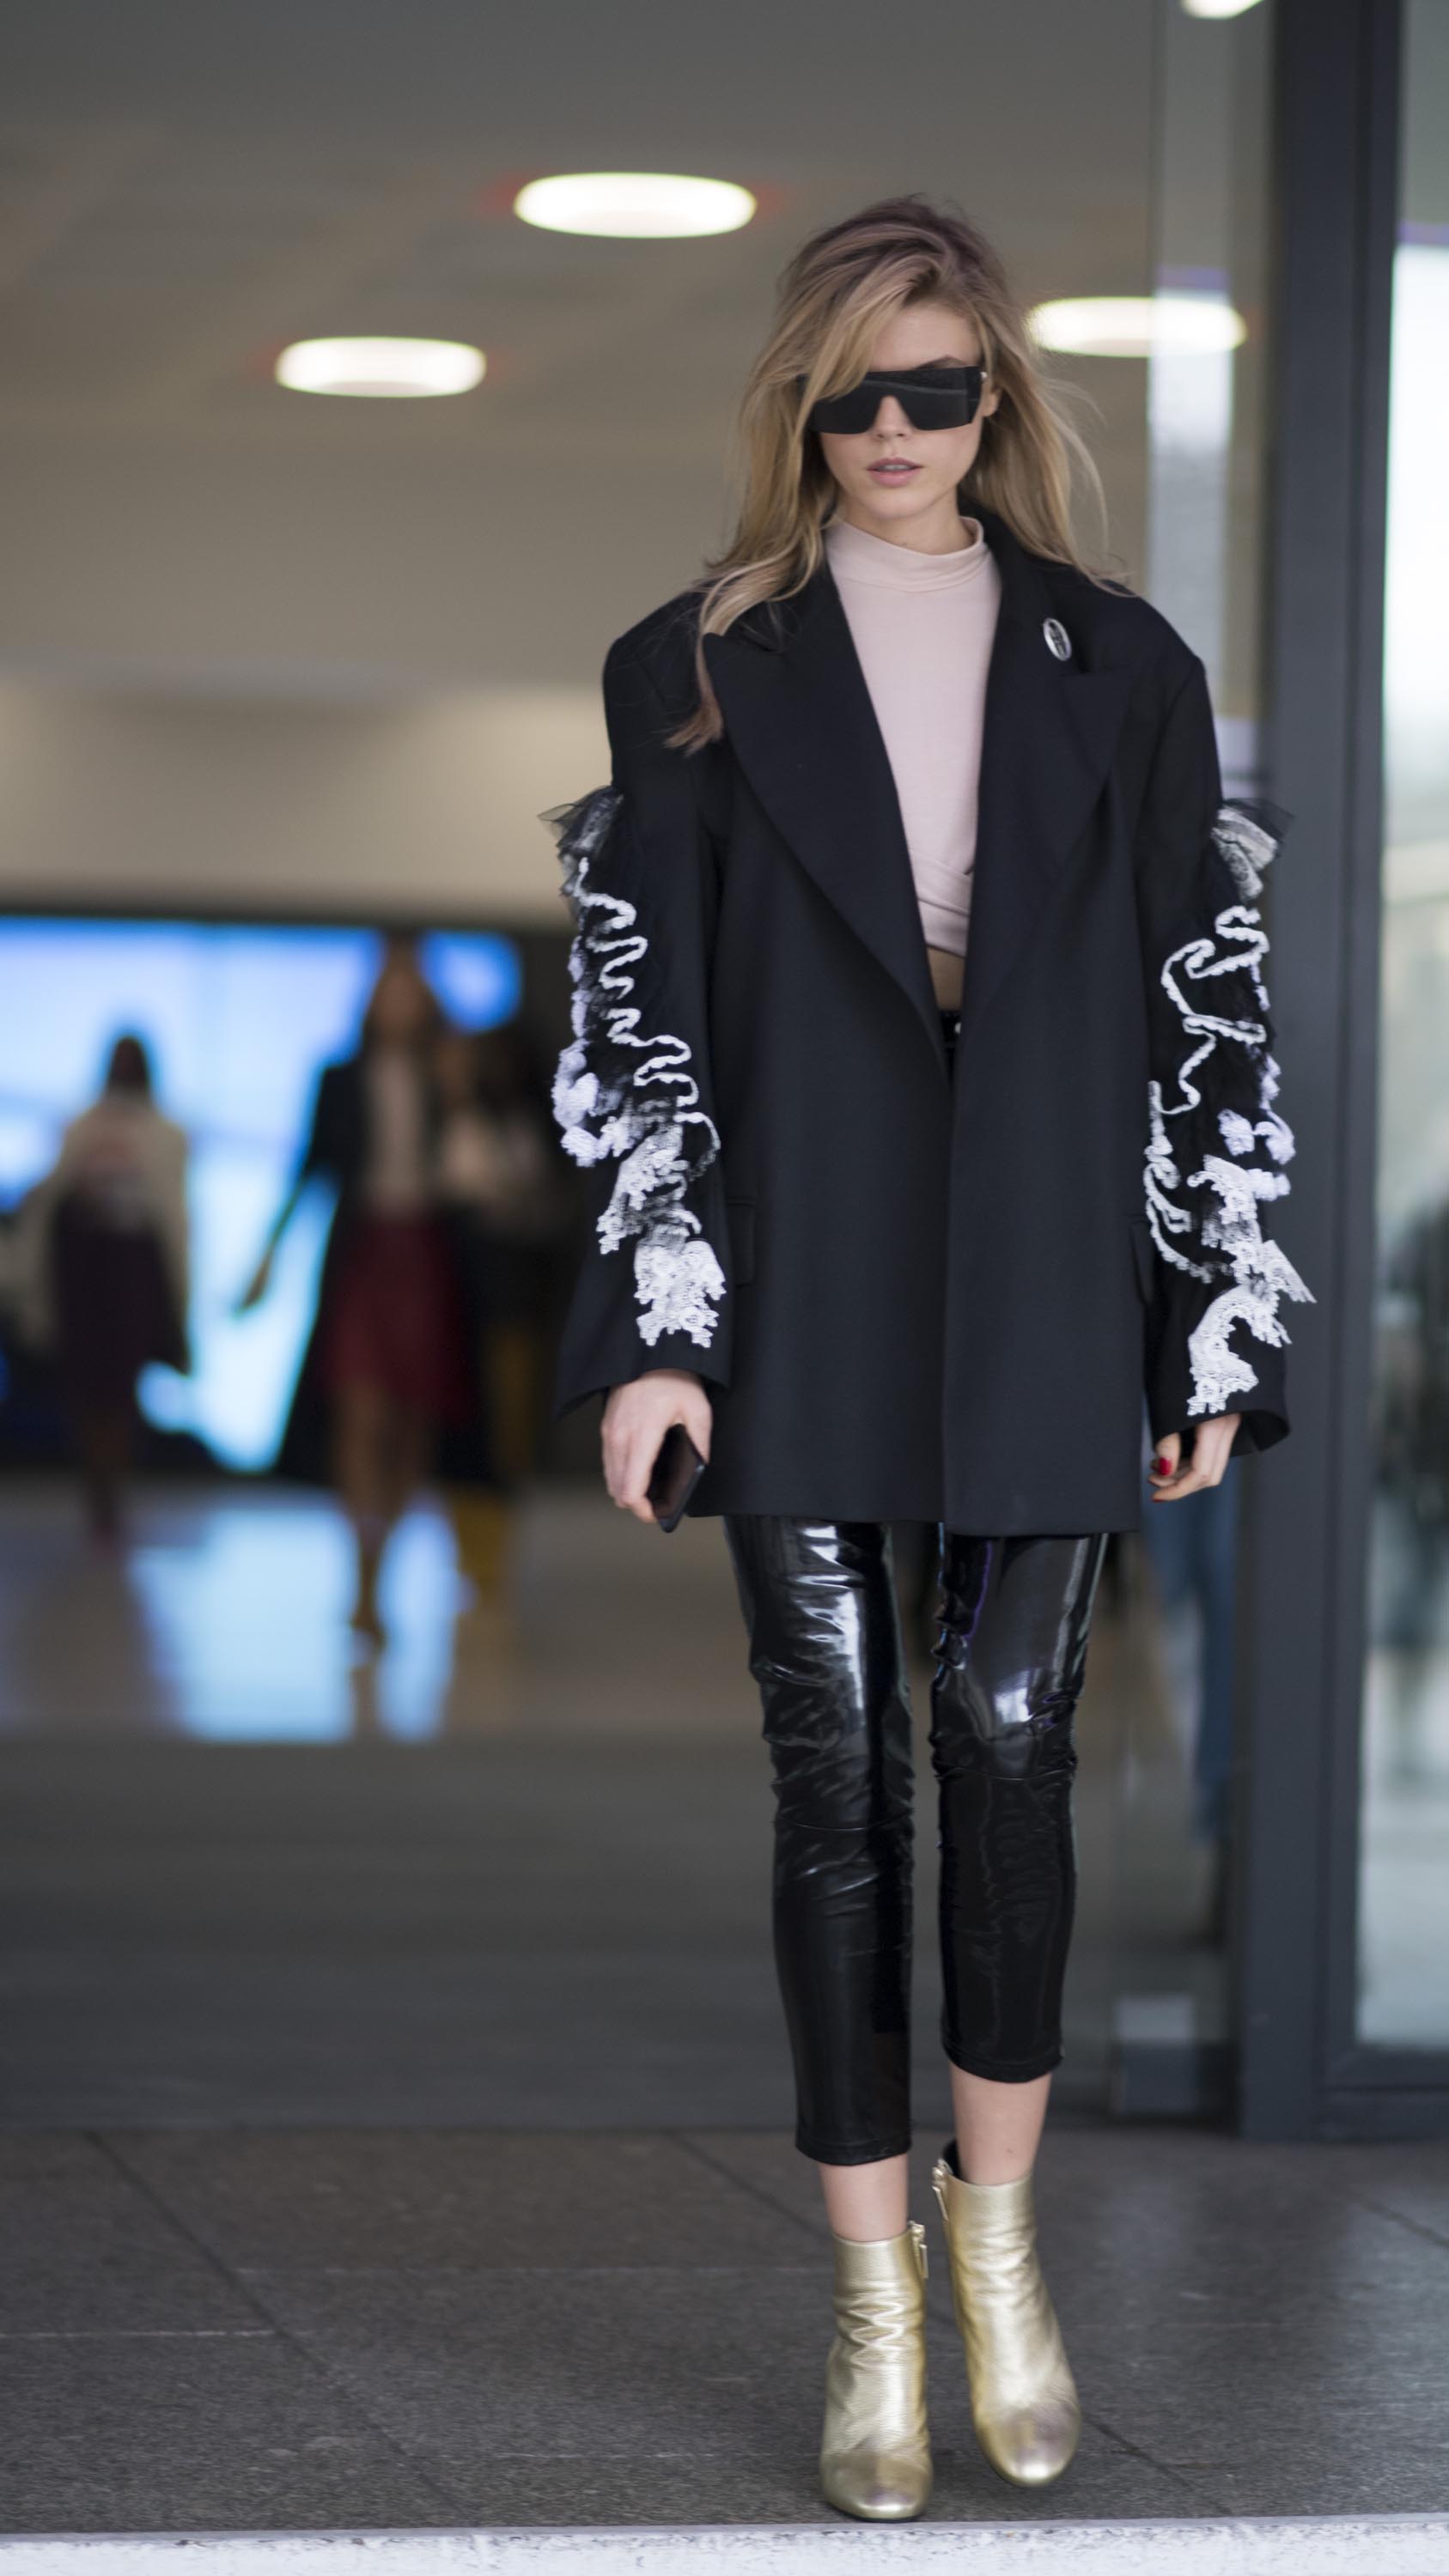 Maryna Lynchuk seen during the London Fashion Week